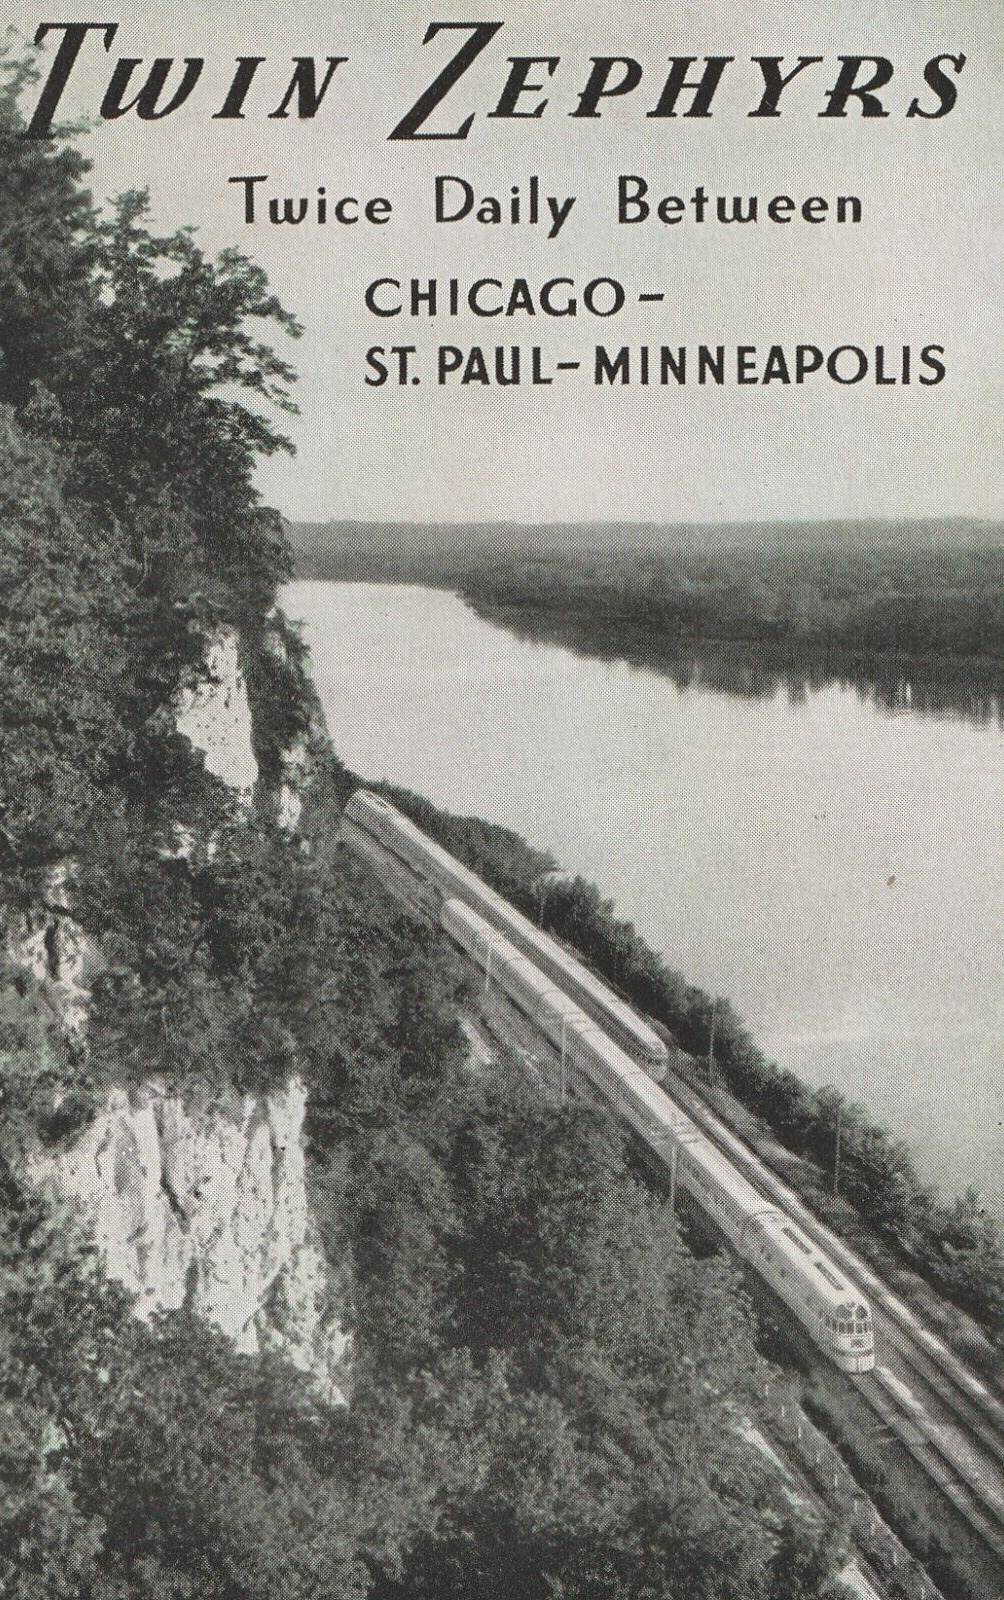 Vintage Postcard Trains Twin Zephyrs Chicago-St. Paul-Minneapolis Twice Daily